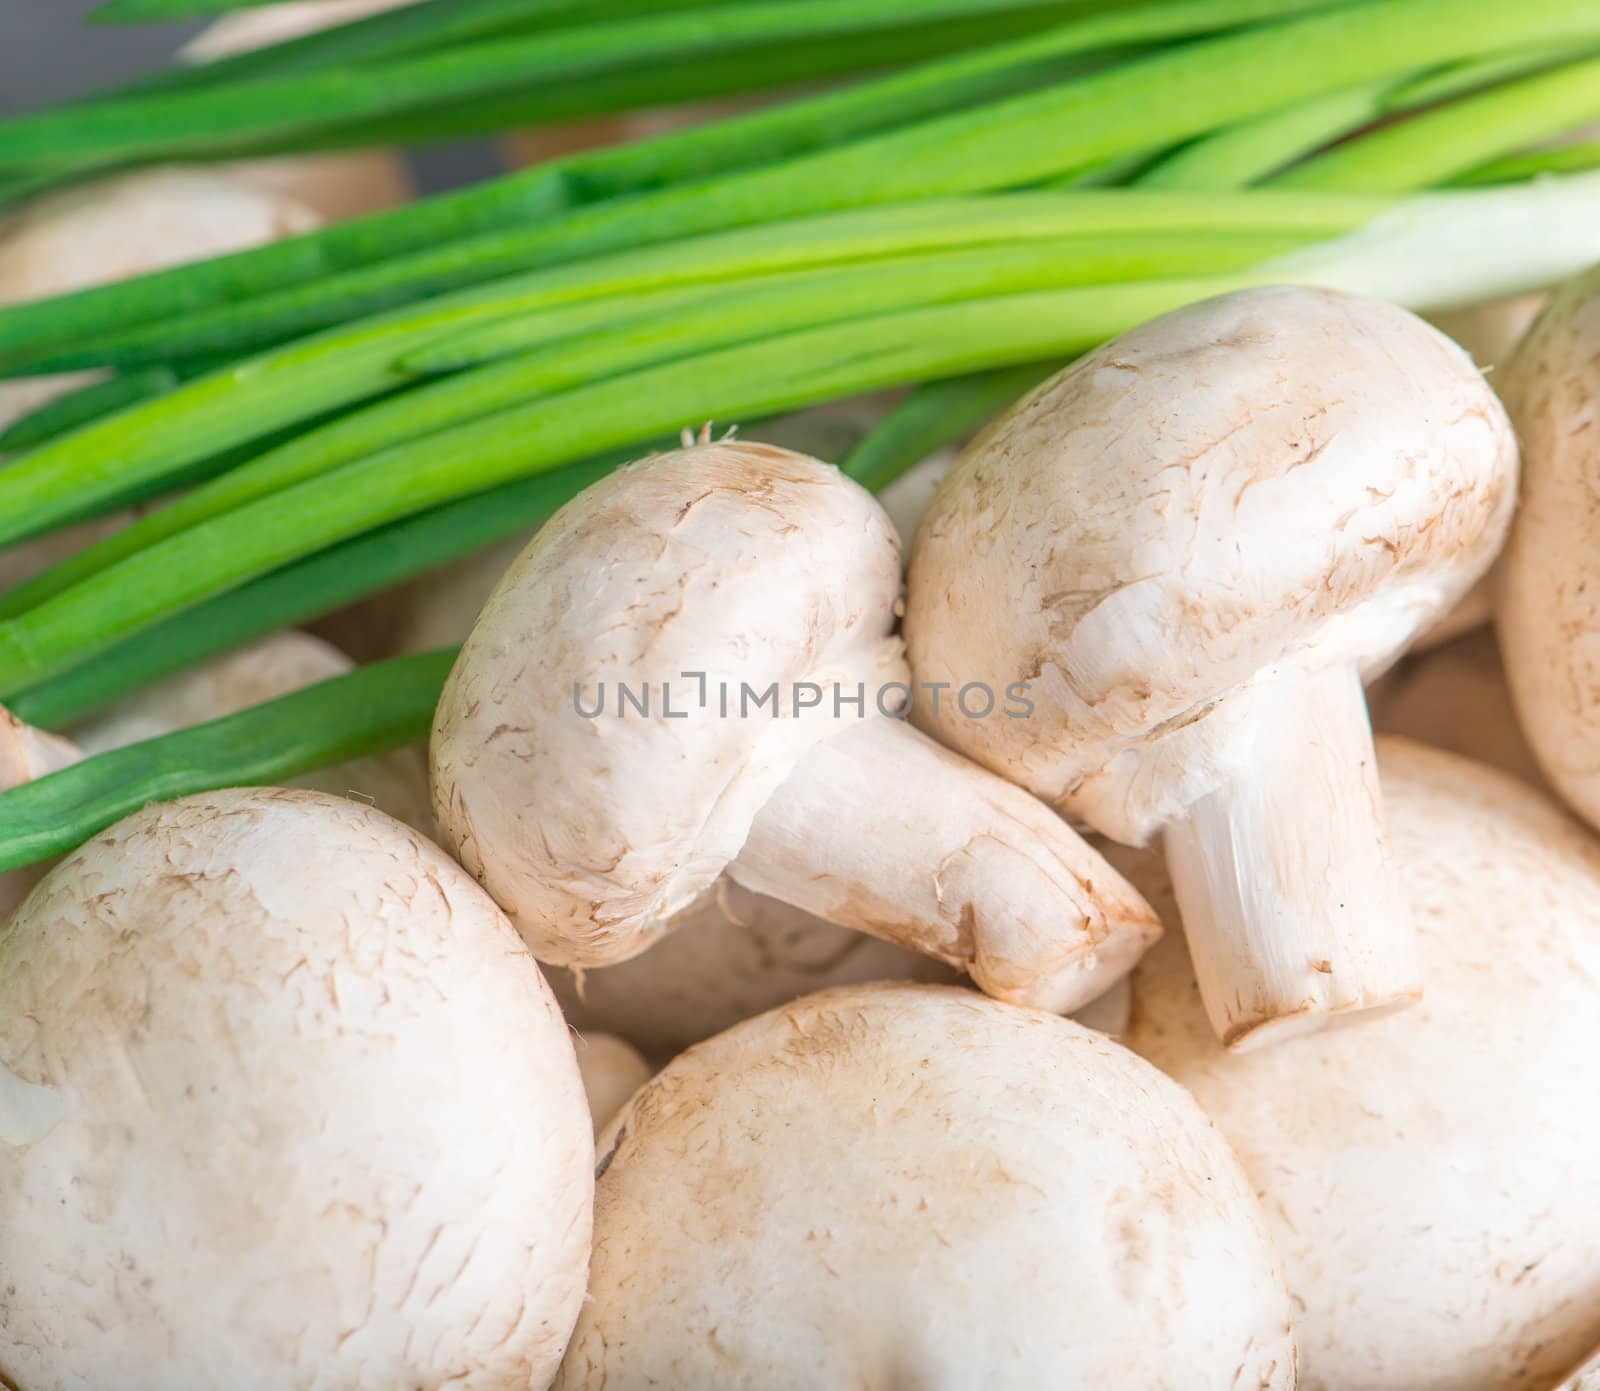 field mushrooms with green onions closeup